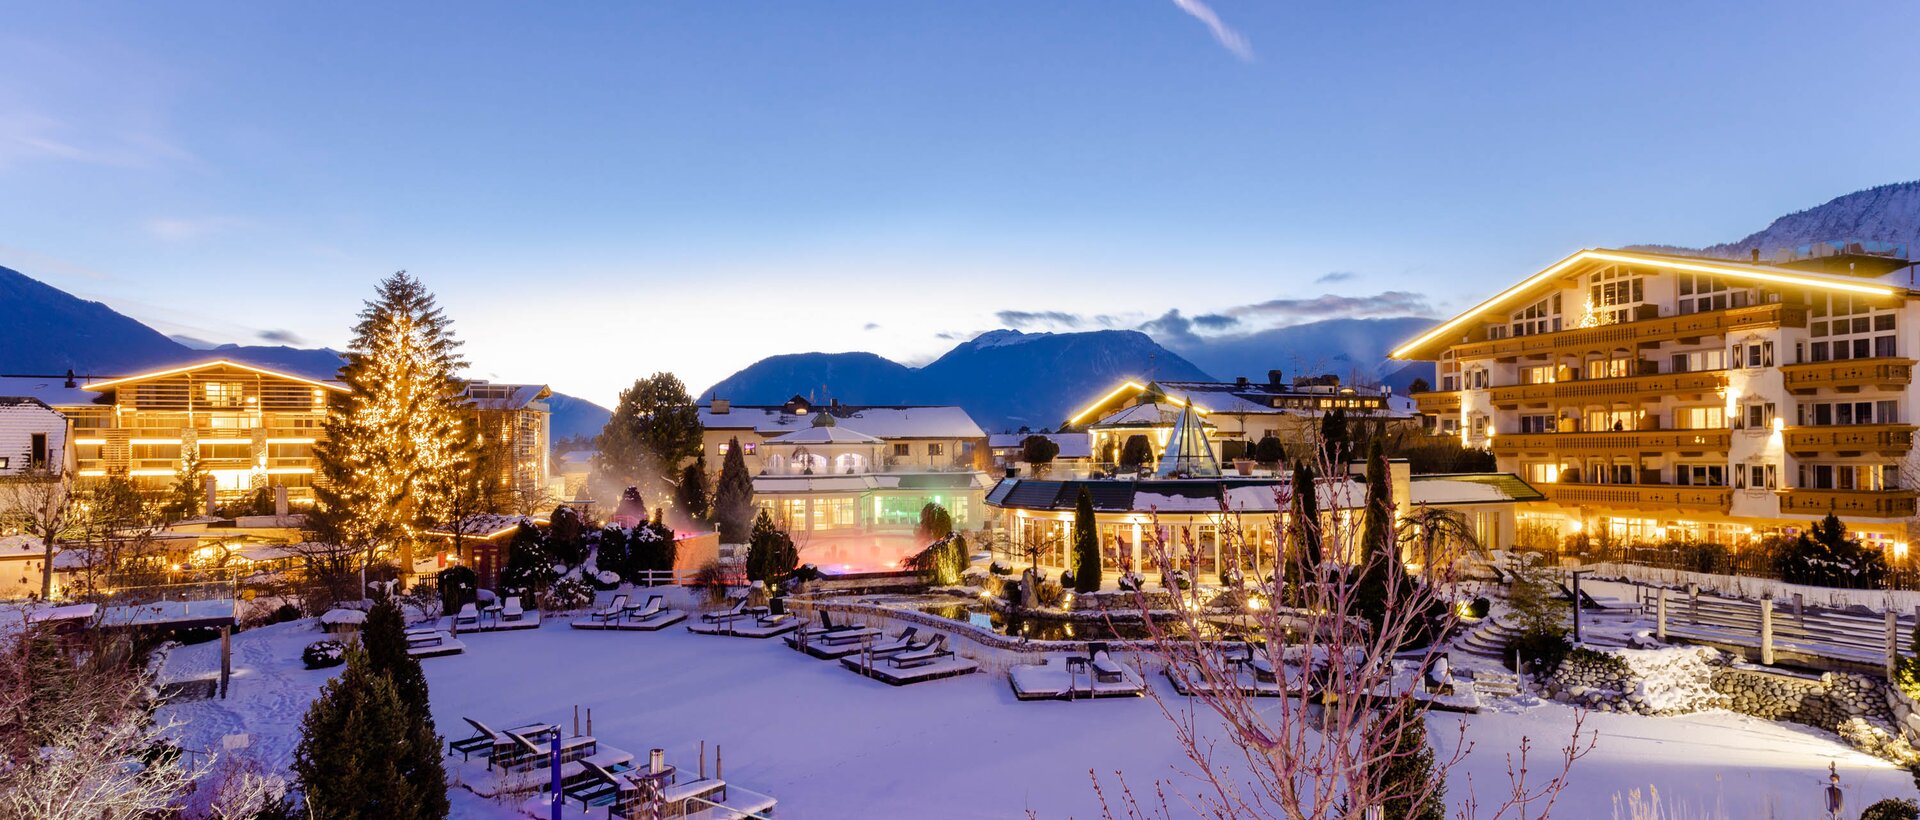 Winter exterior view | Best Alpine Wellness Hotel Schwarz, Tyrol